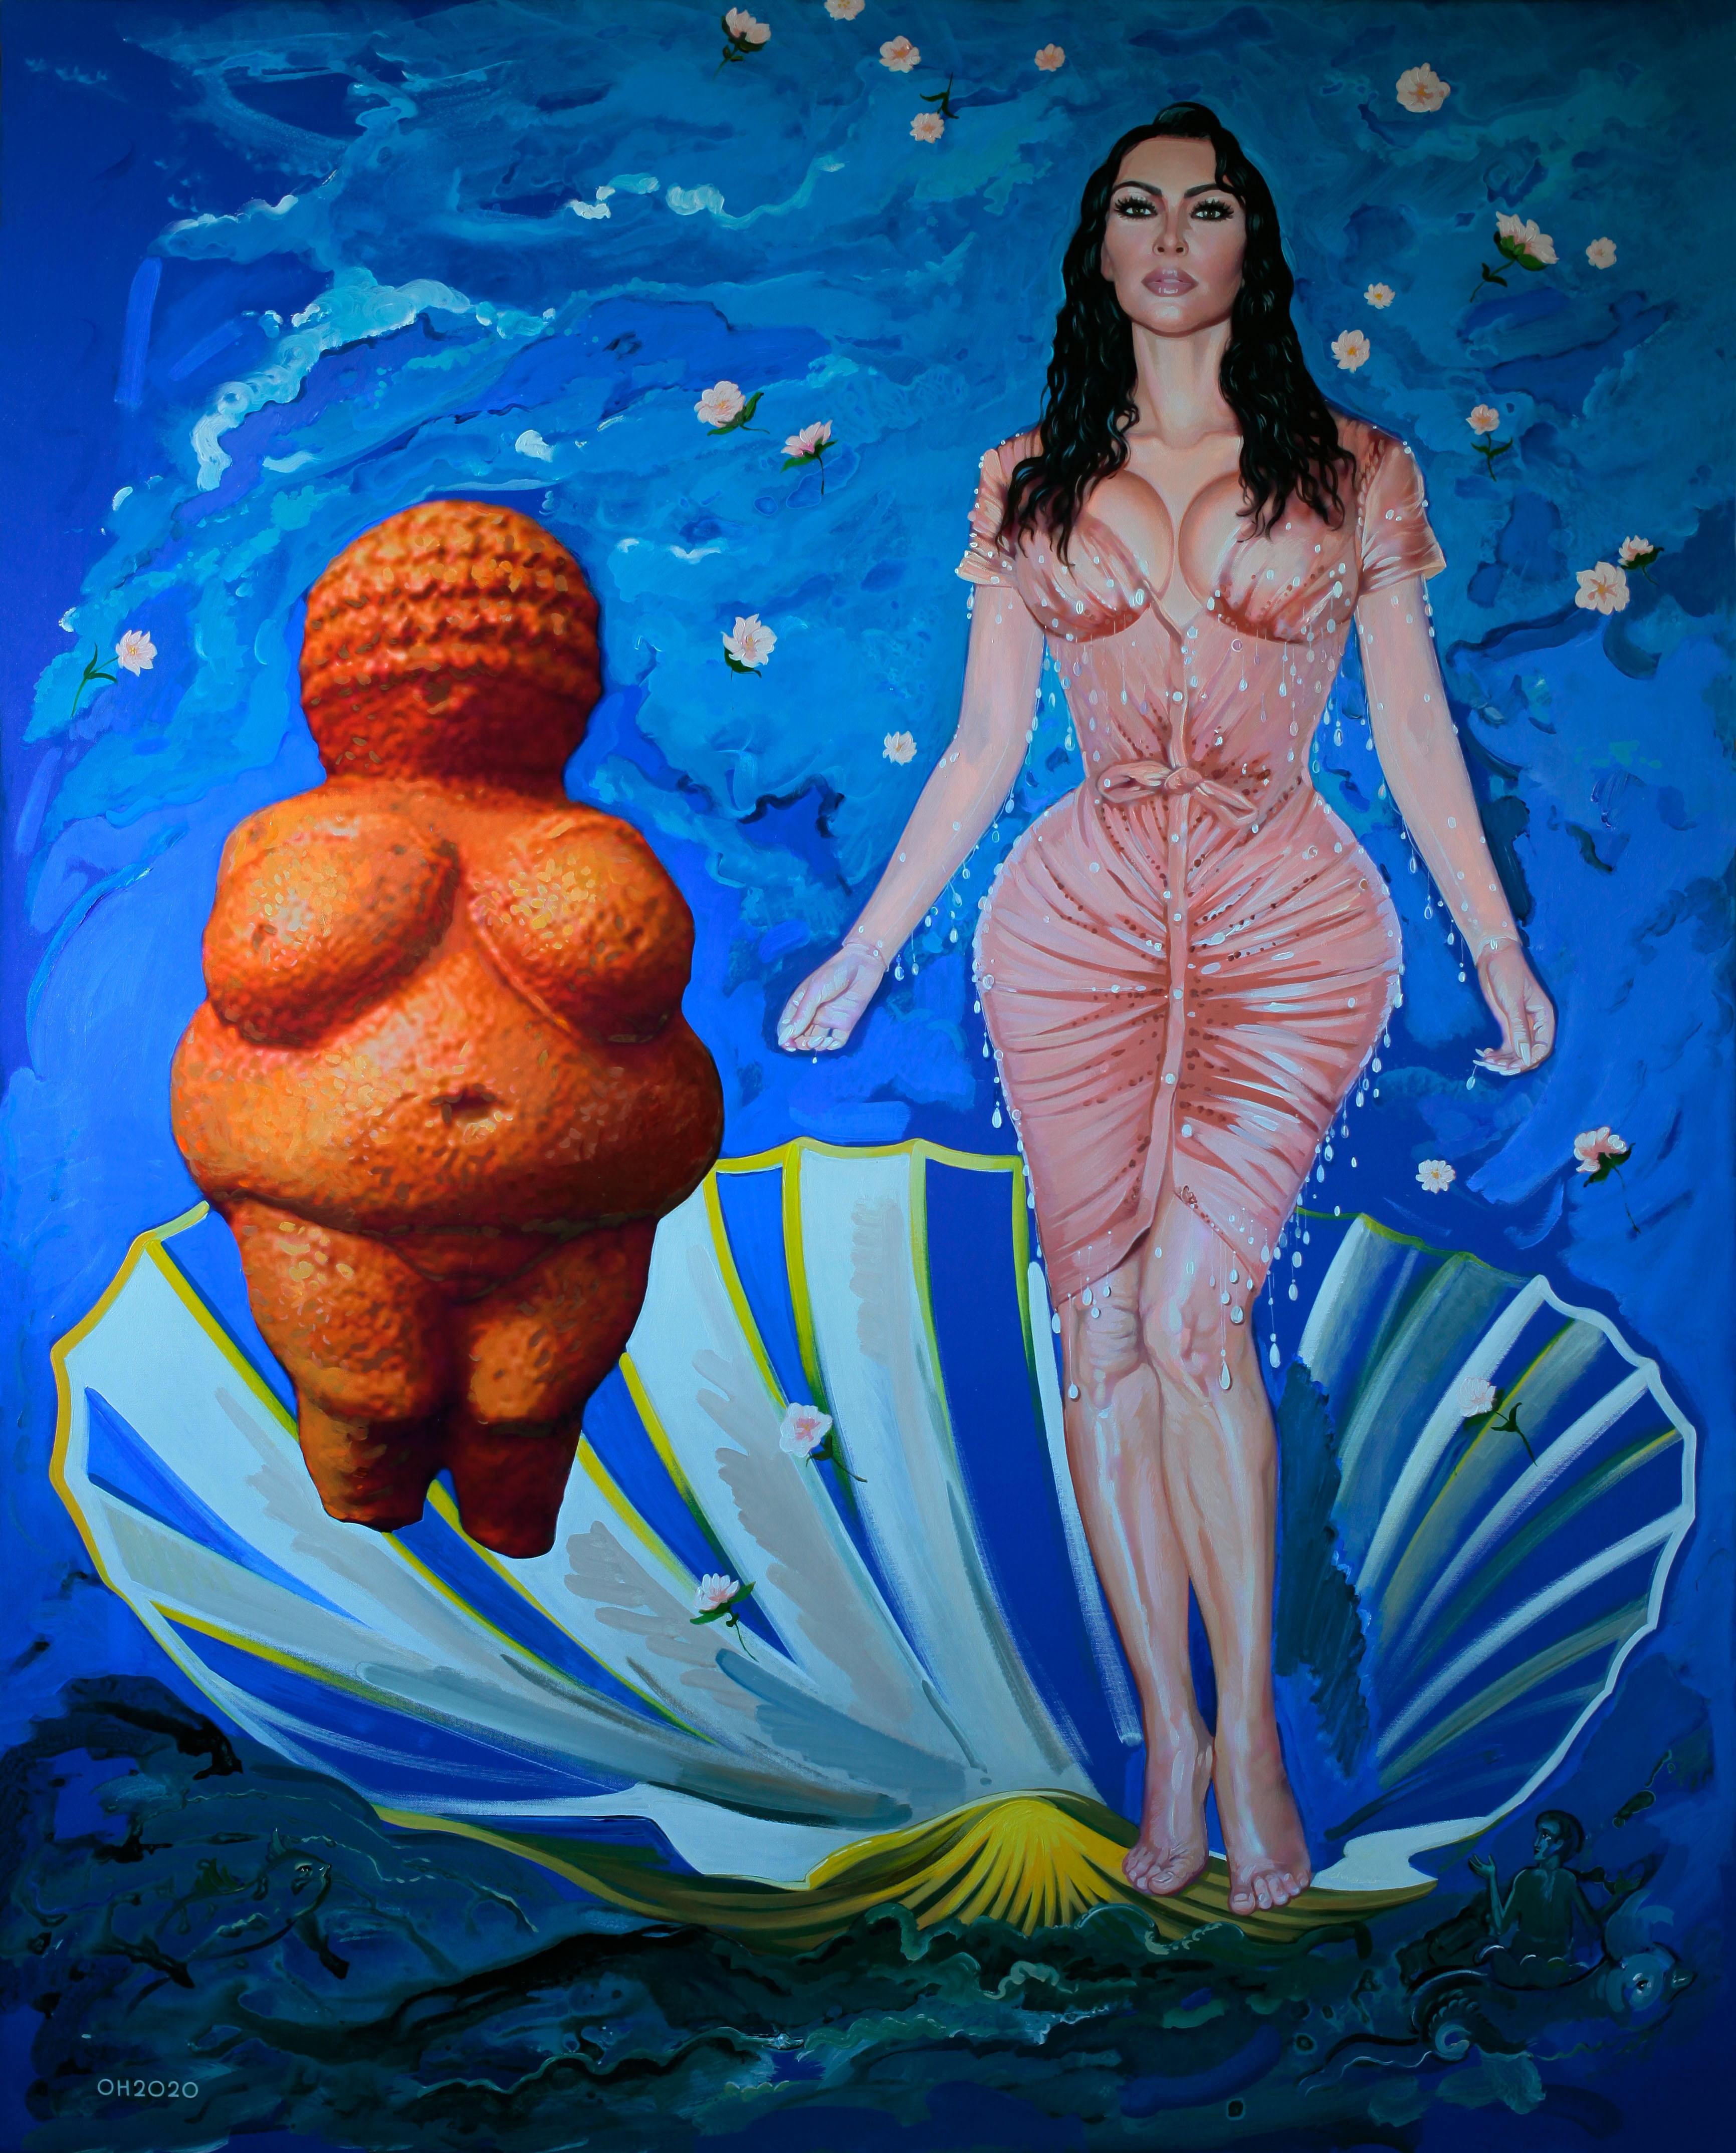 Ukrainian Contemporary Art by Orest Hrytsak - Kim Kardashian Et Venus